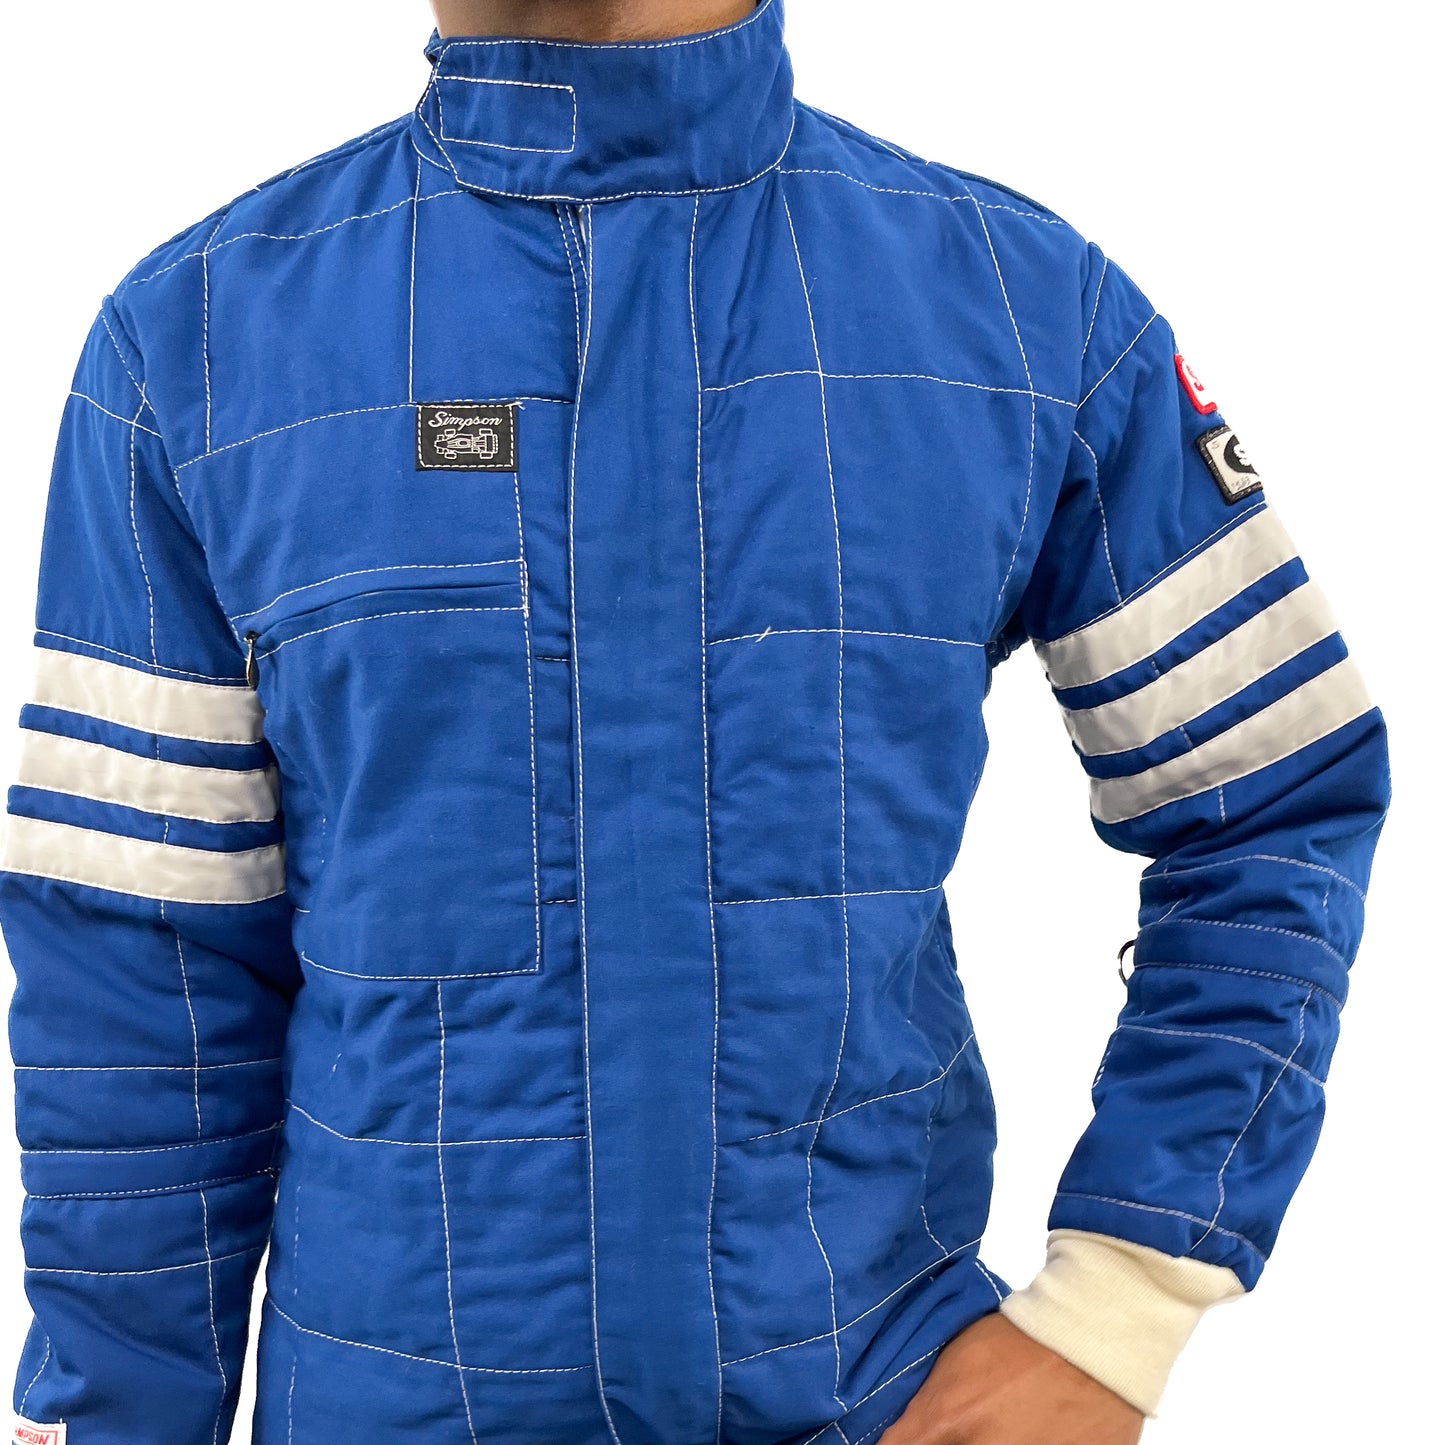 80s Simpson Racing Jacket